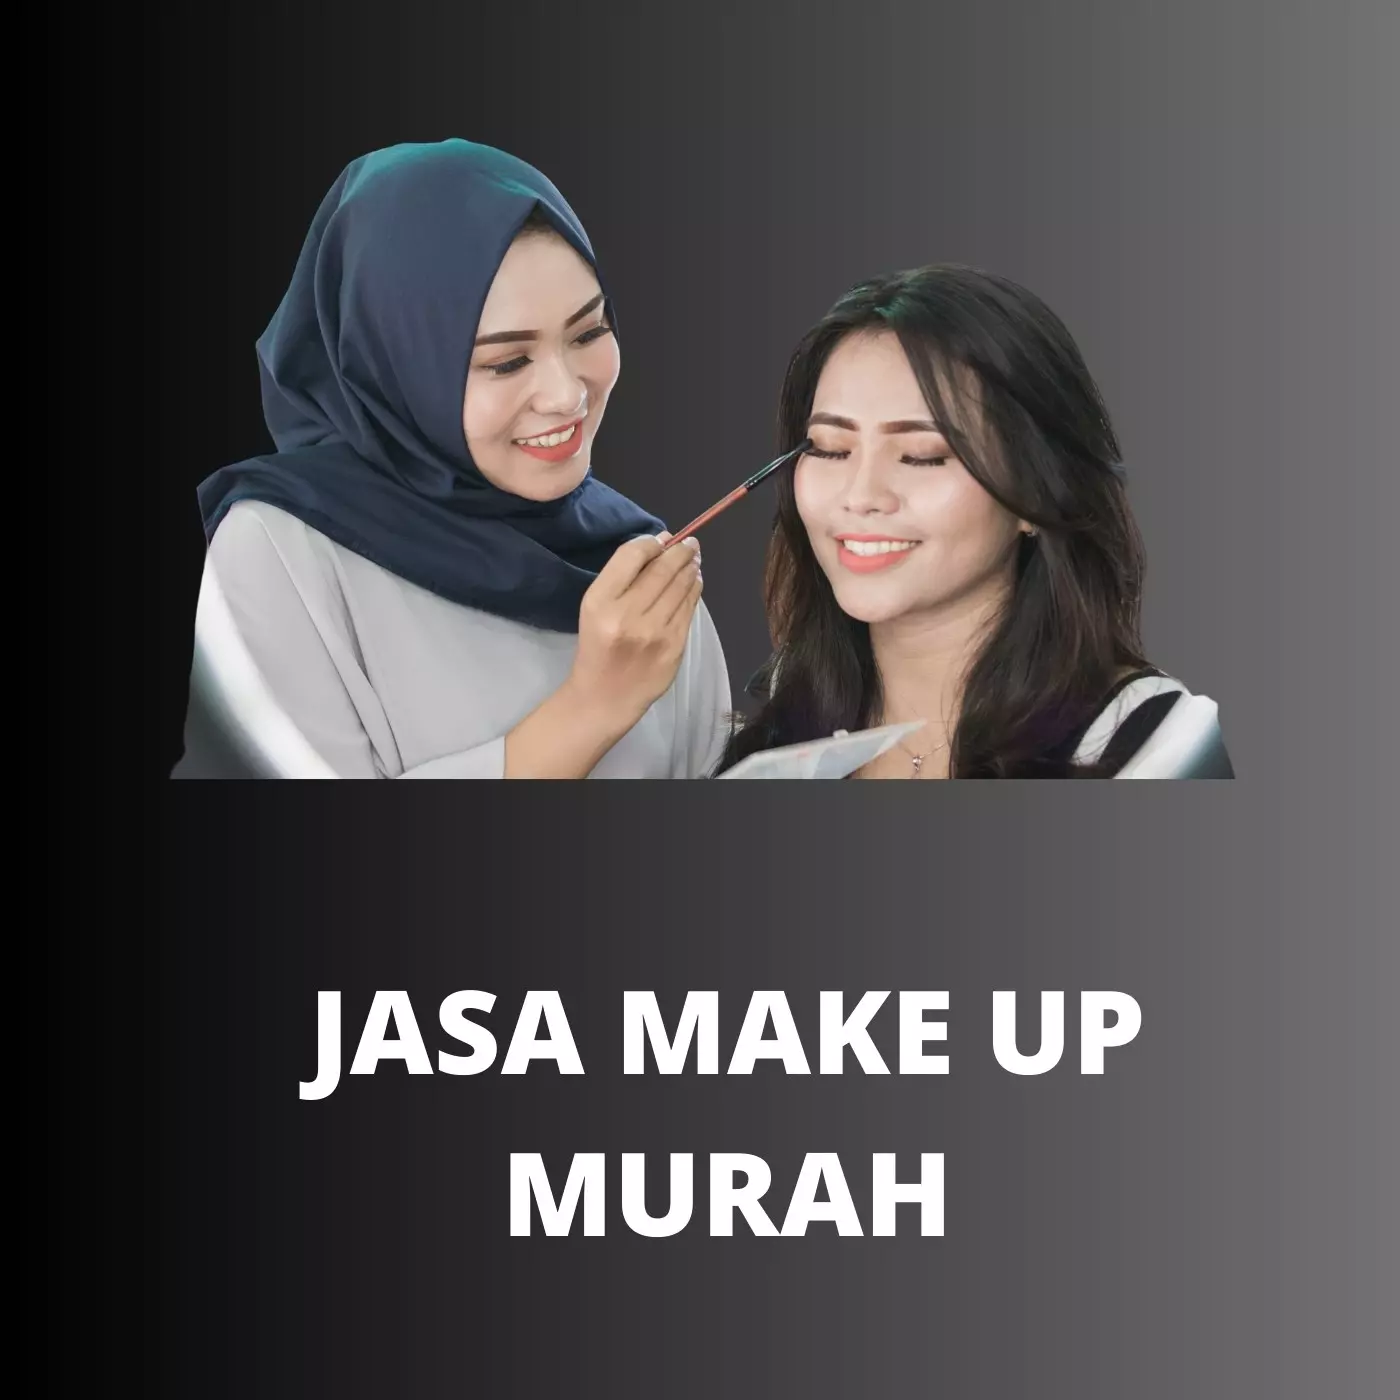 Jasa Make Up Murah